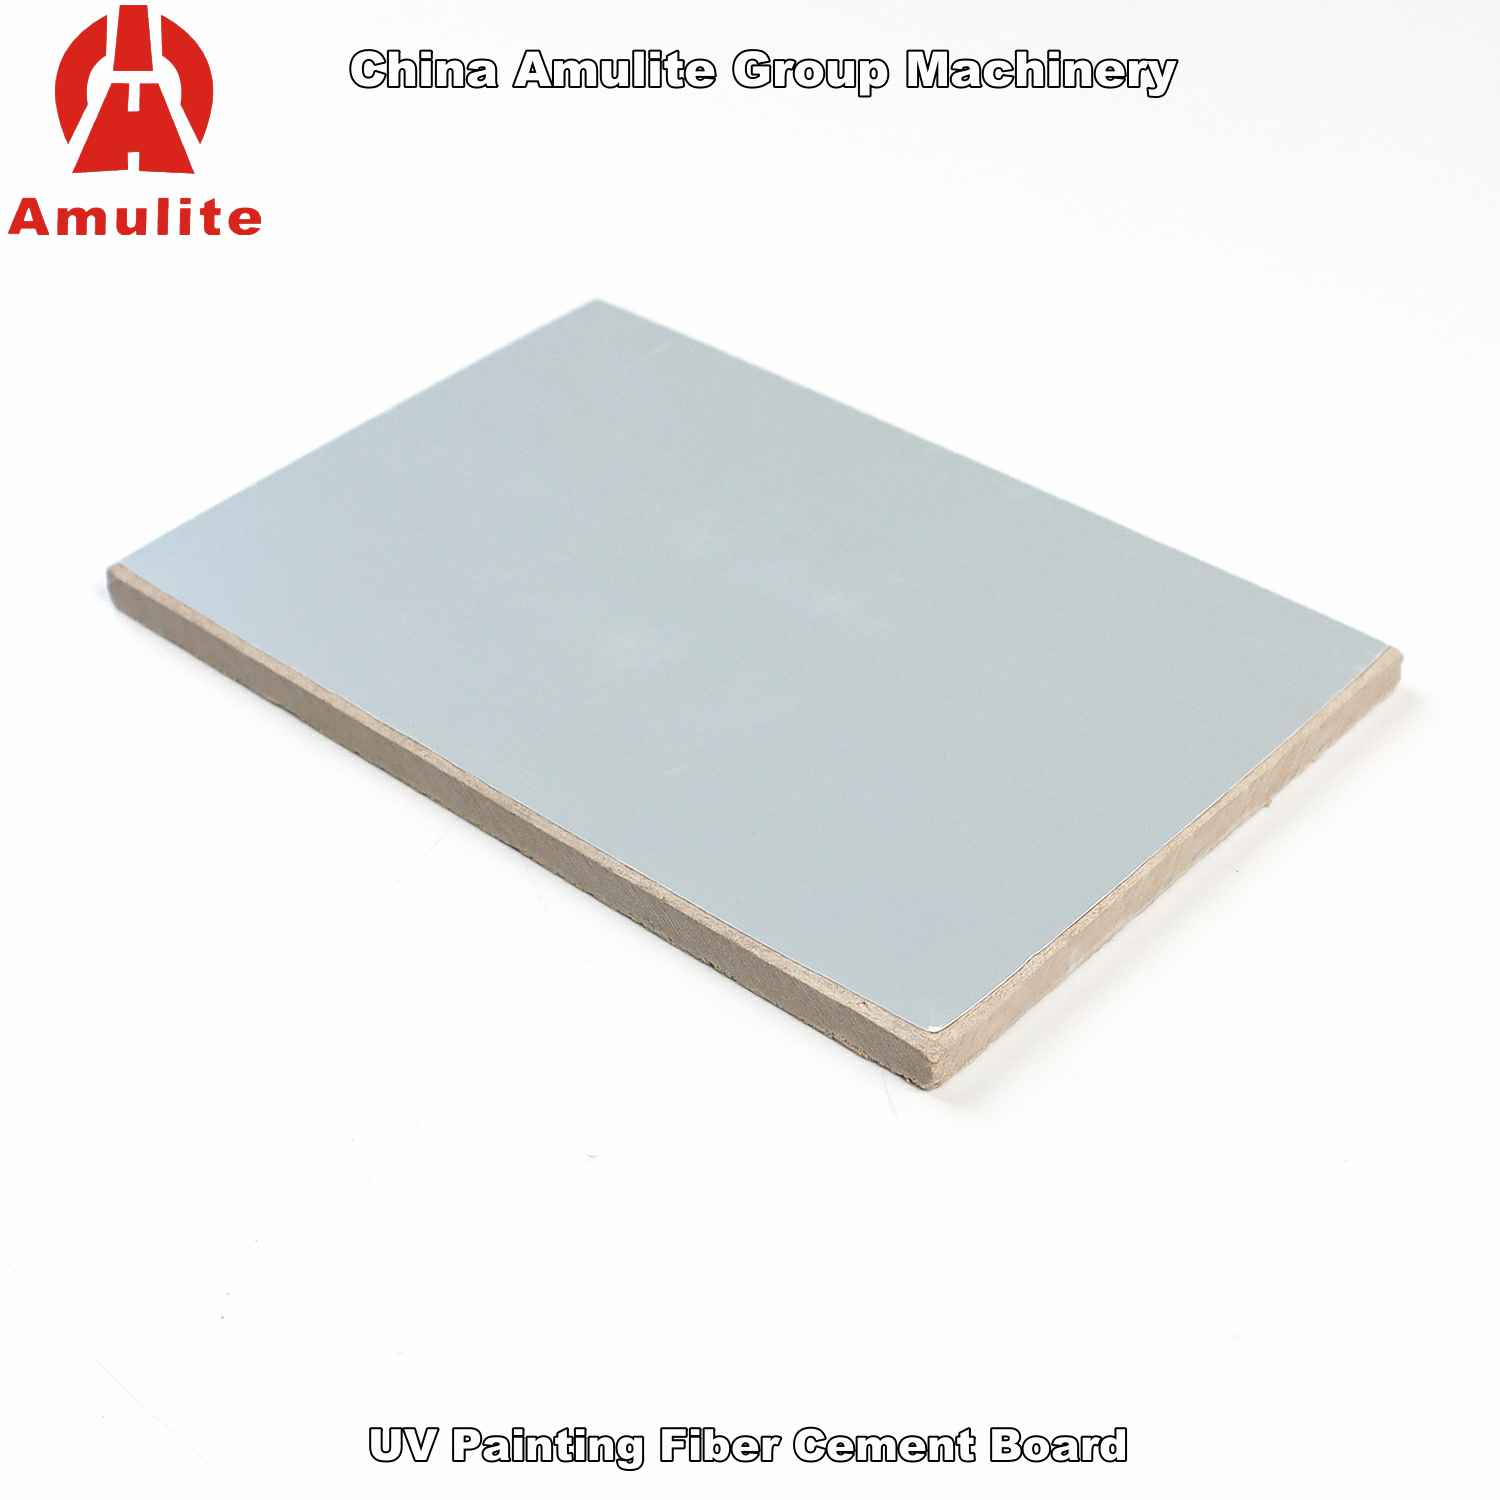 Uv Painting Fibre Cement Board (9)